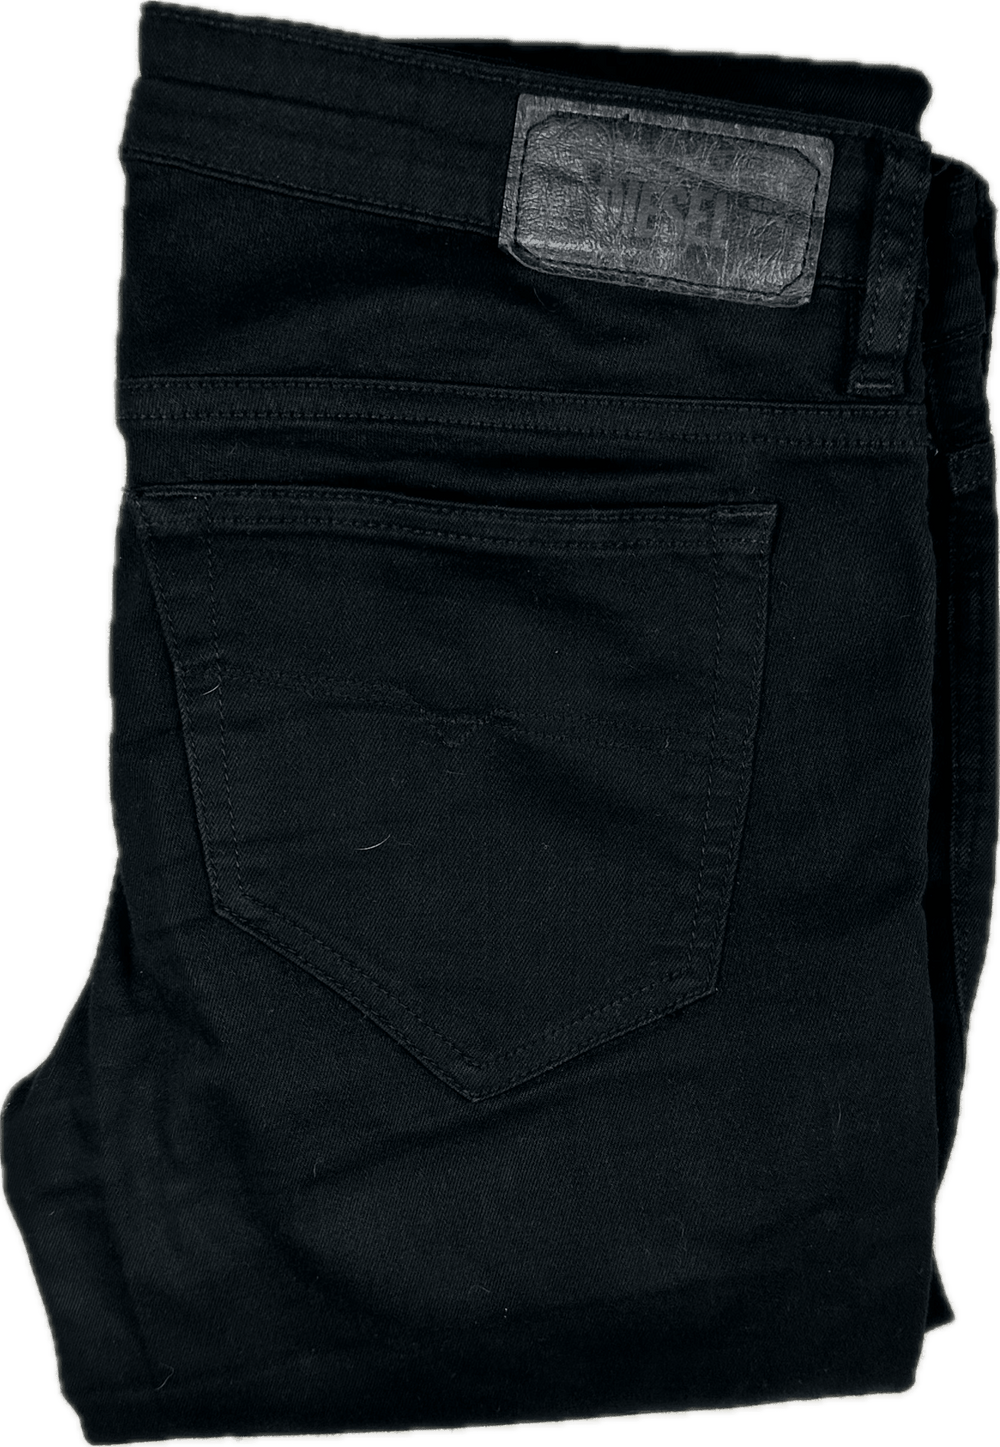 Diesel Denim 'Skinzee Low' Super Skinny Black Jeans -Size 29/32 - Jean Pool